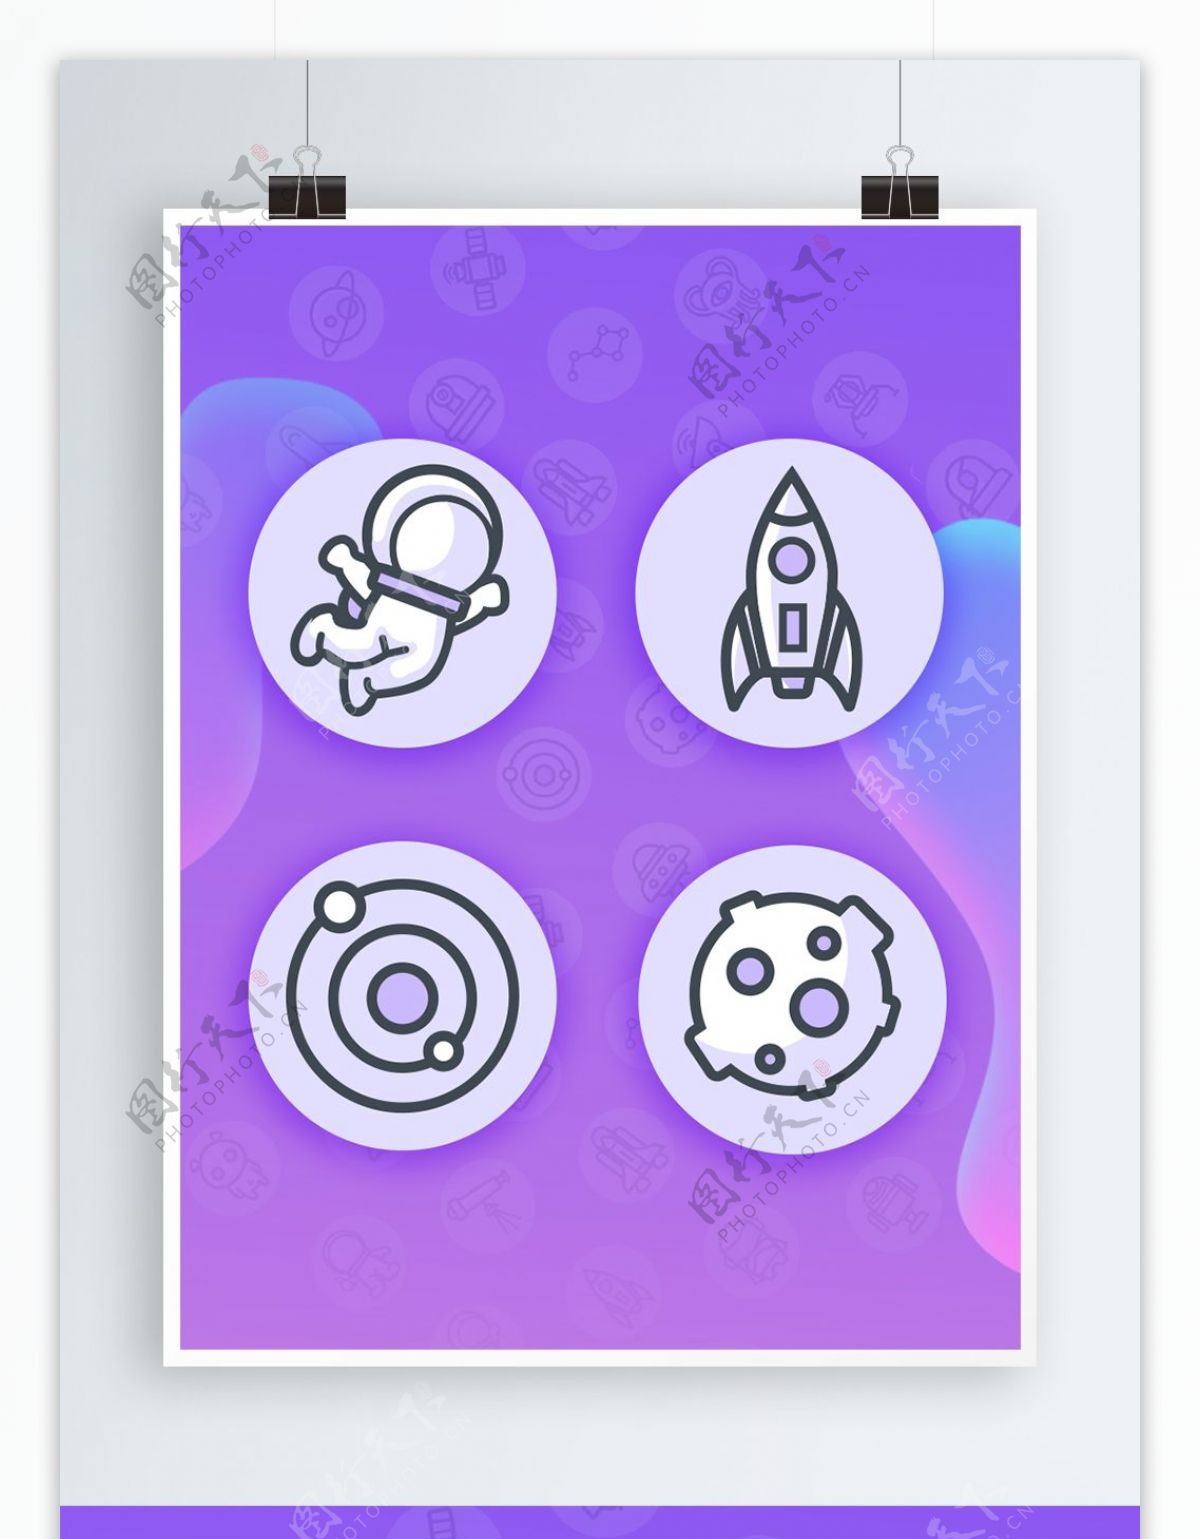 简约卡通线性外太空icon3